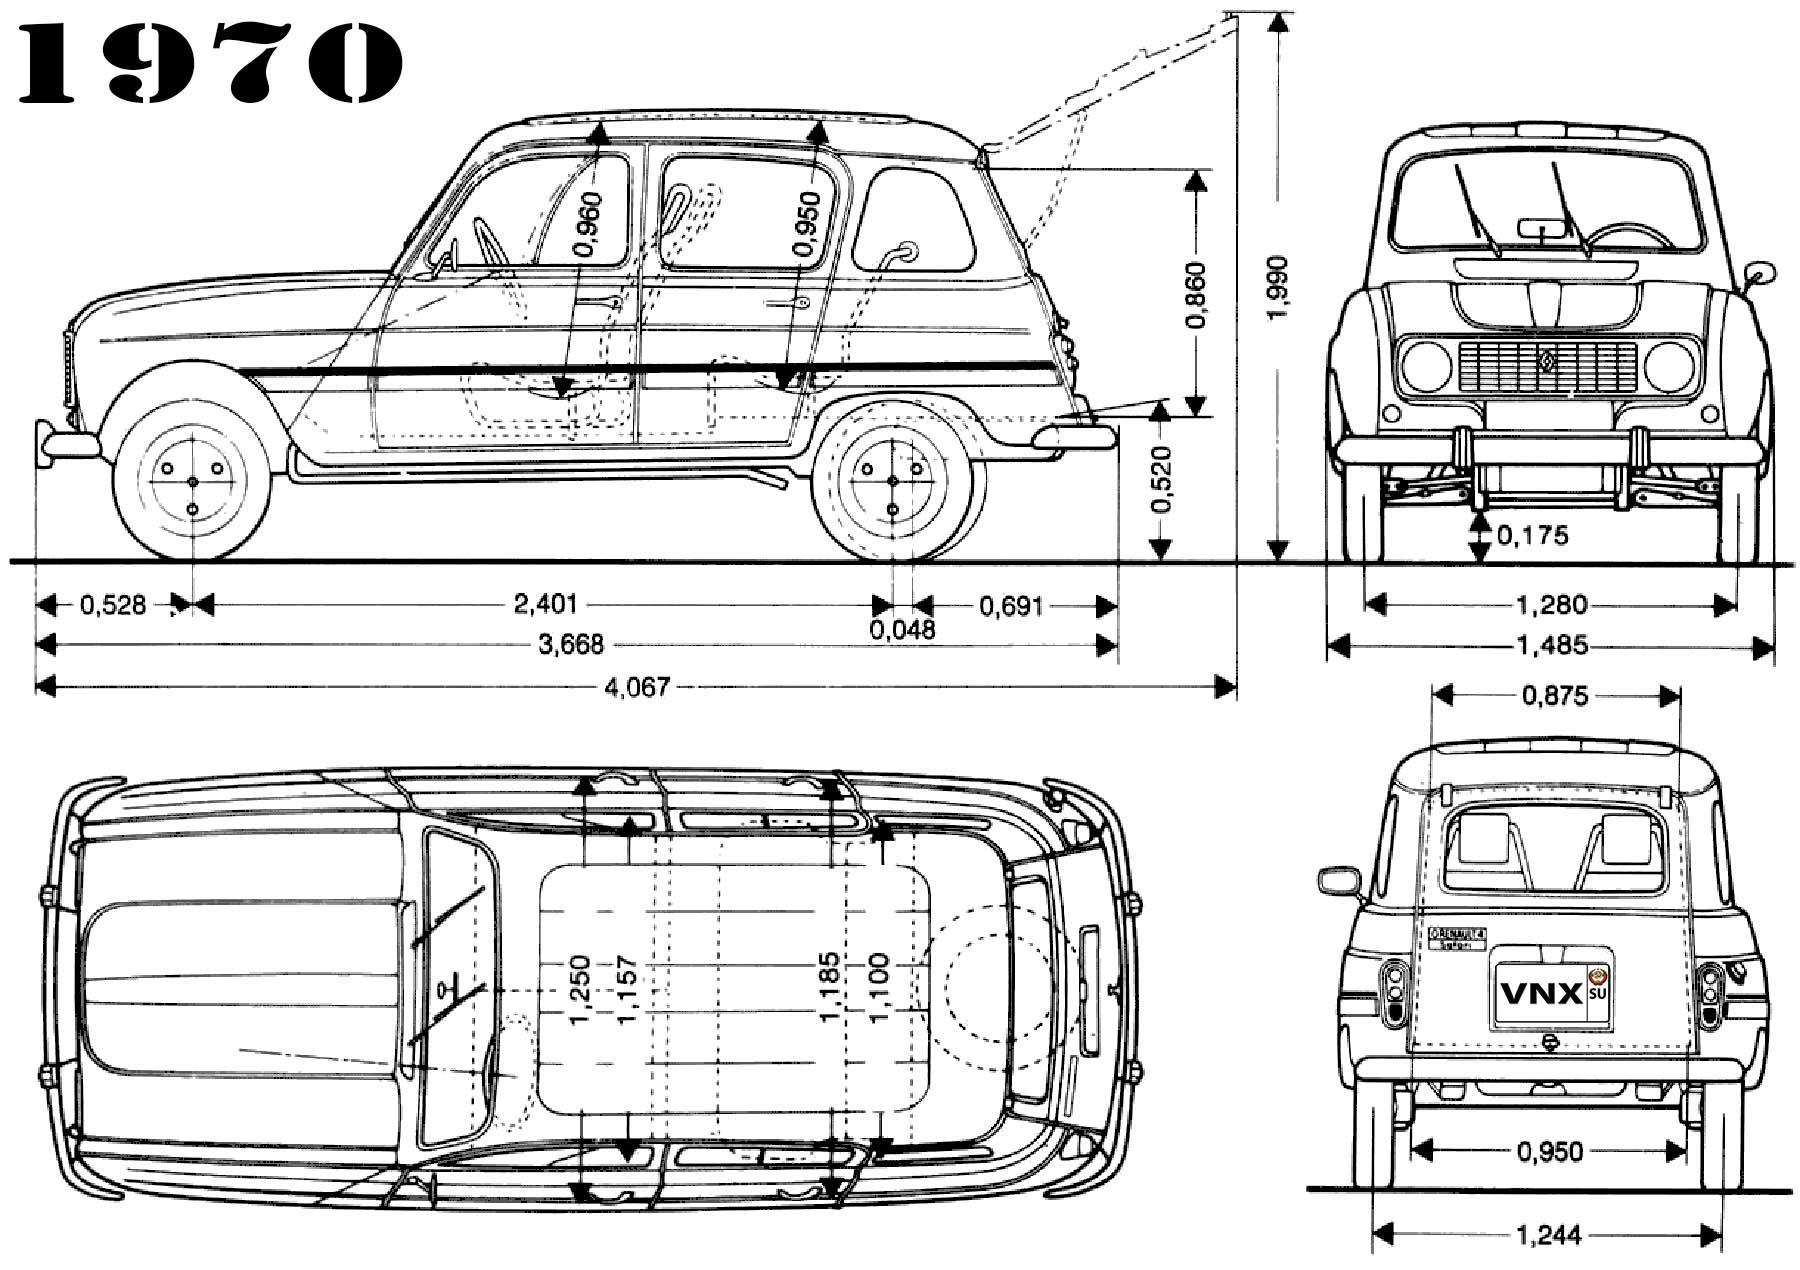 Габаритные размеры Рено 4 (dimensions Renault 4)